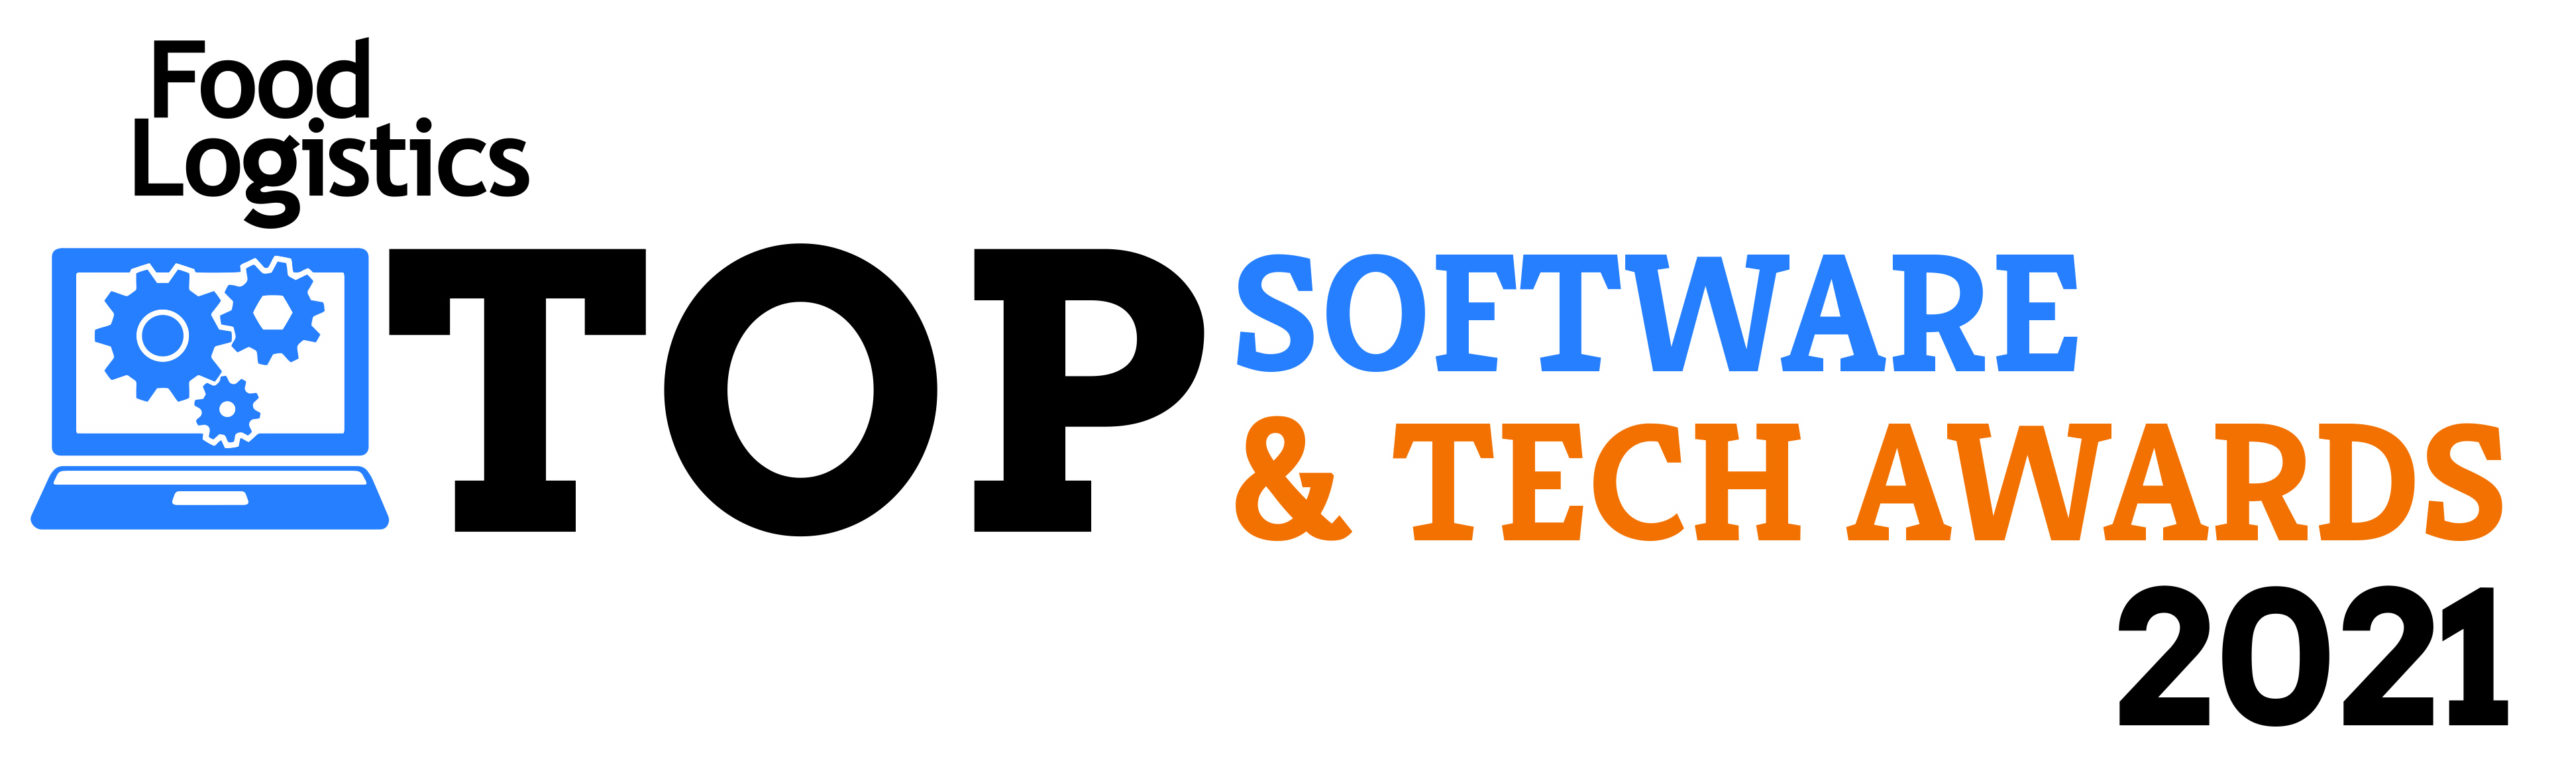 Top Software award 2021 image